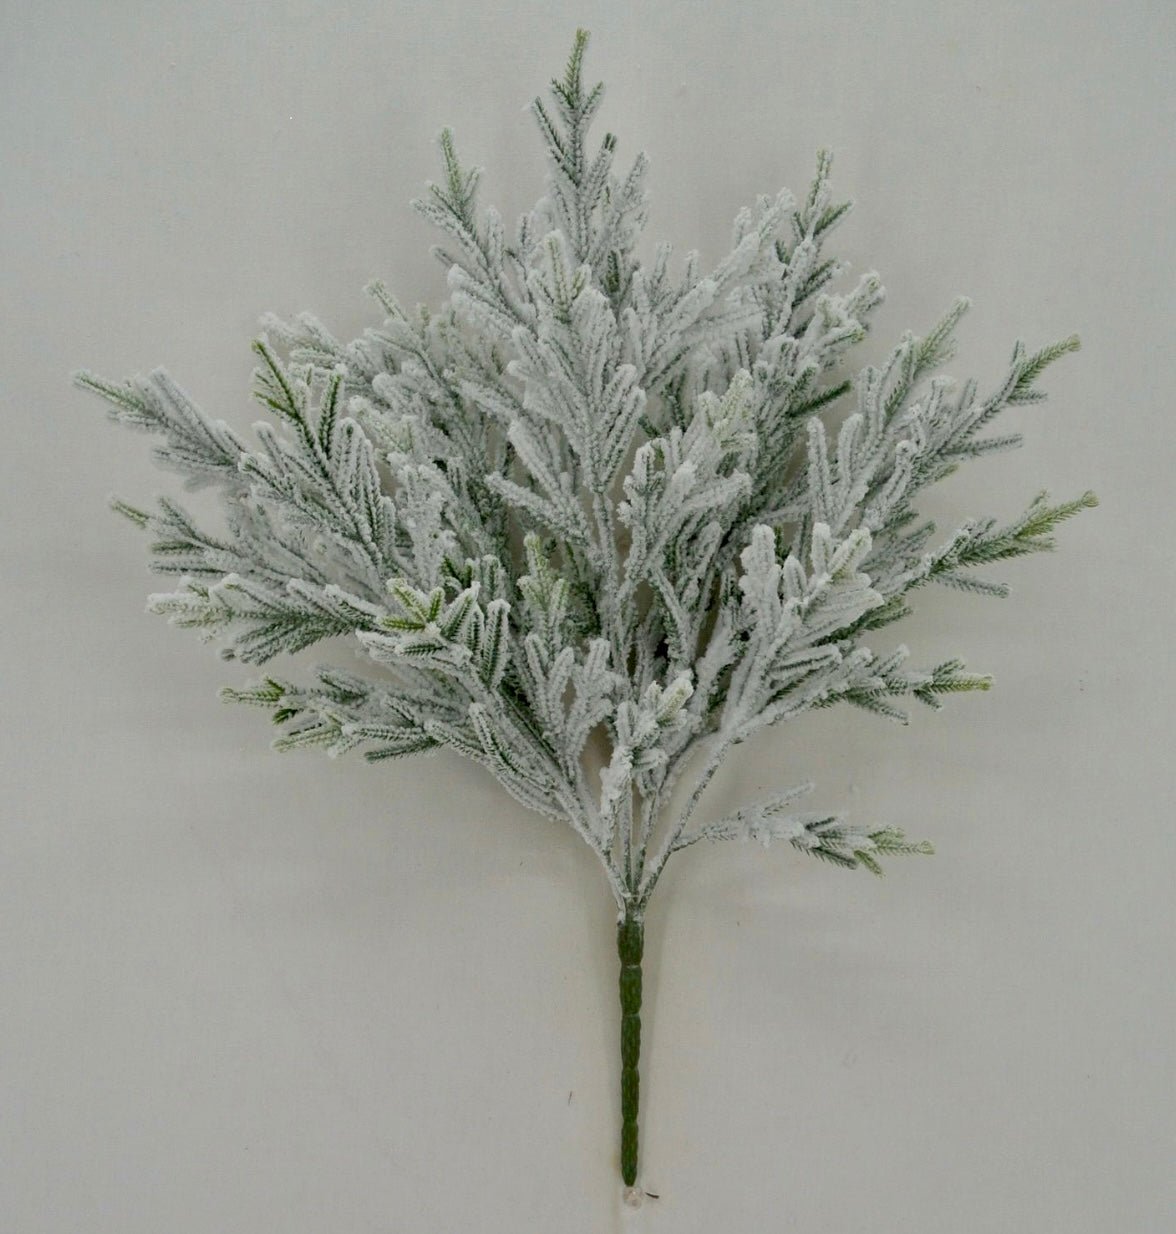 Snowy flocked cypress bush - Greenery Market83659